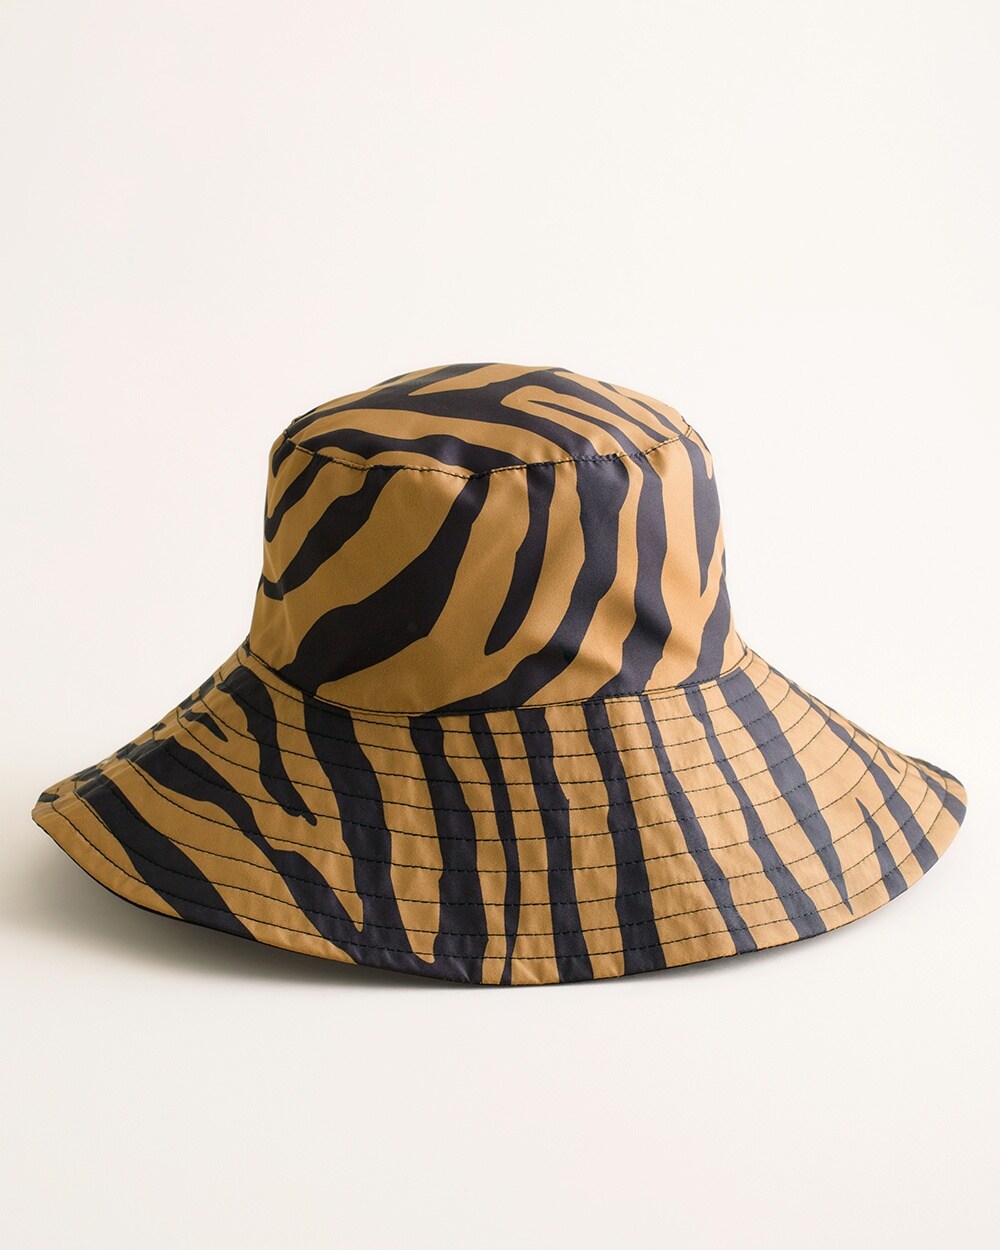 Reversible Zebra-Print to Black Rain Hat